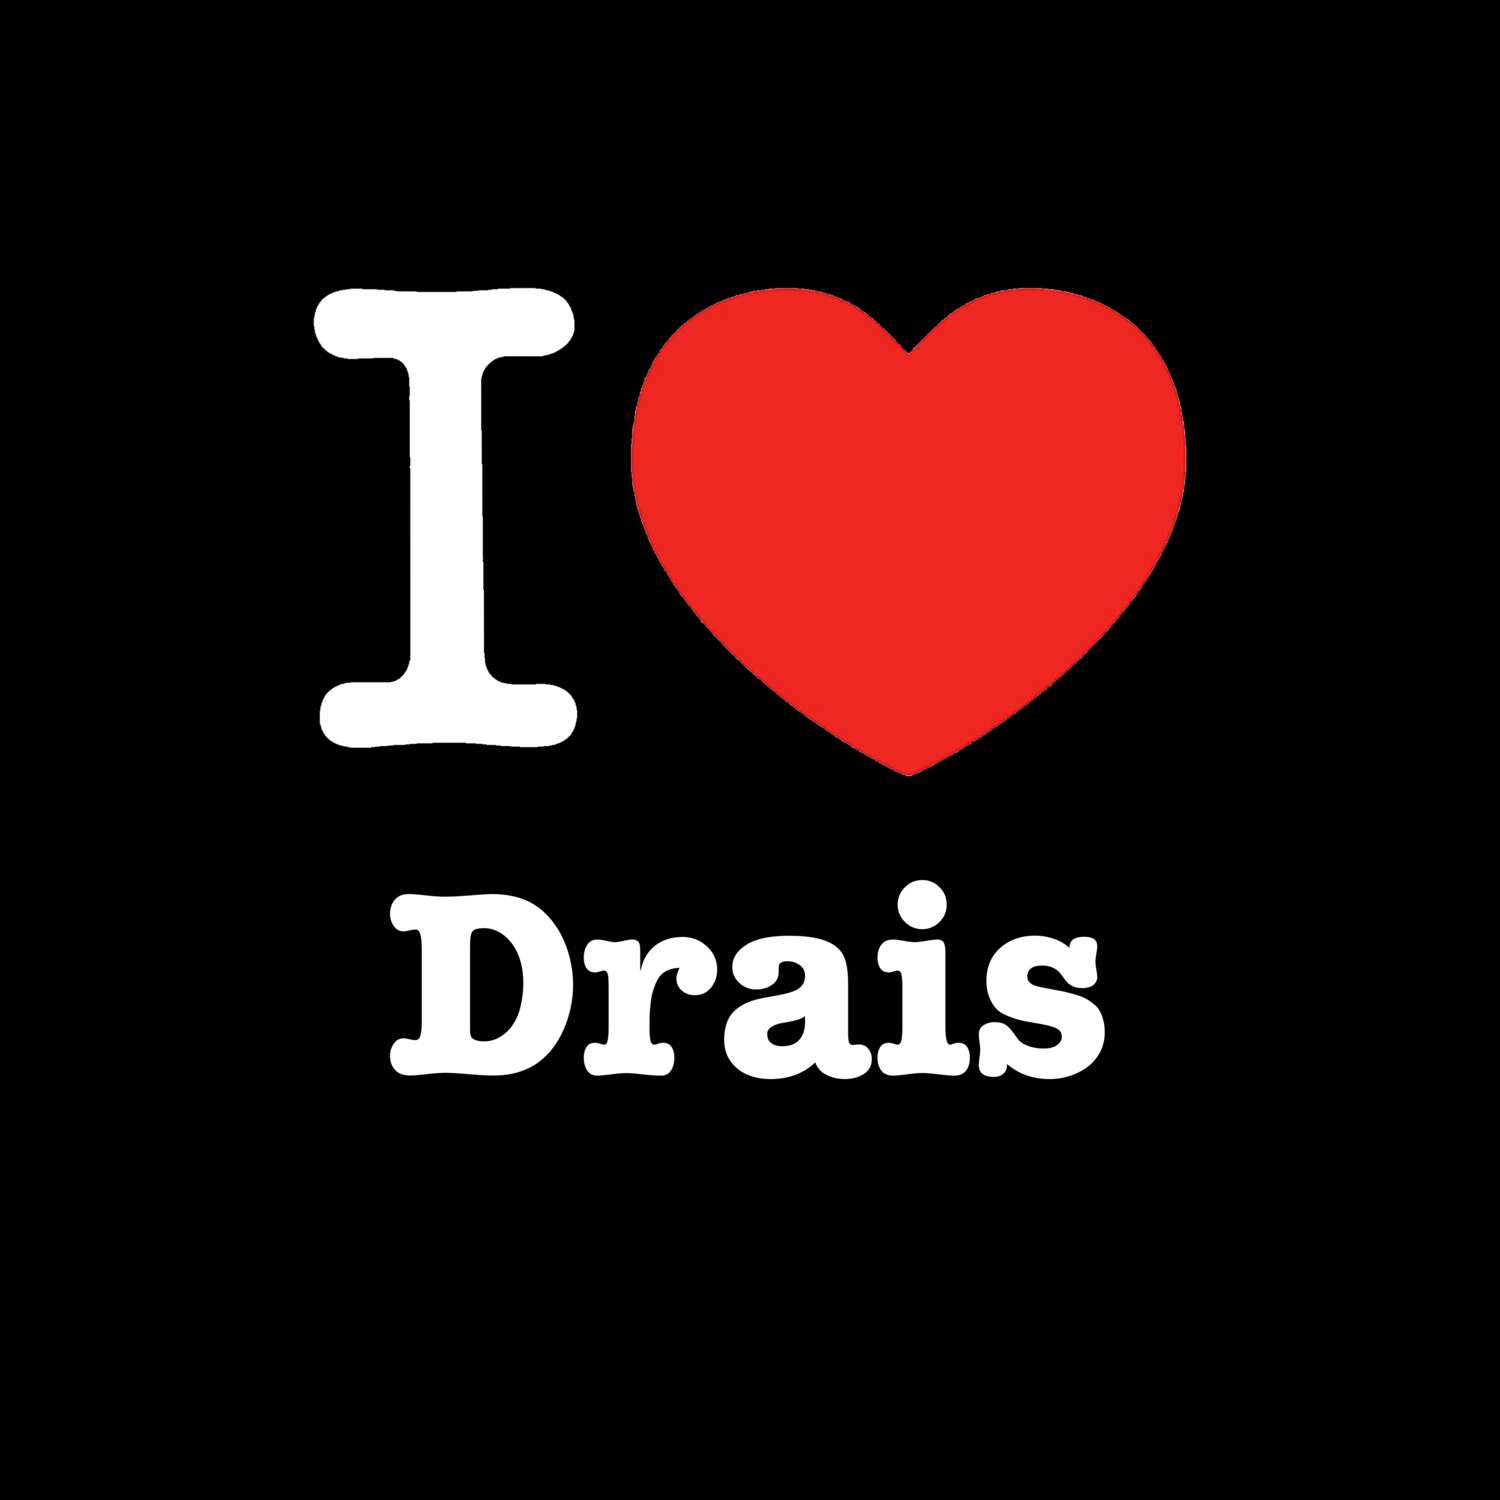 Drais T-Shirt »I love«